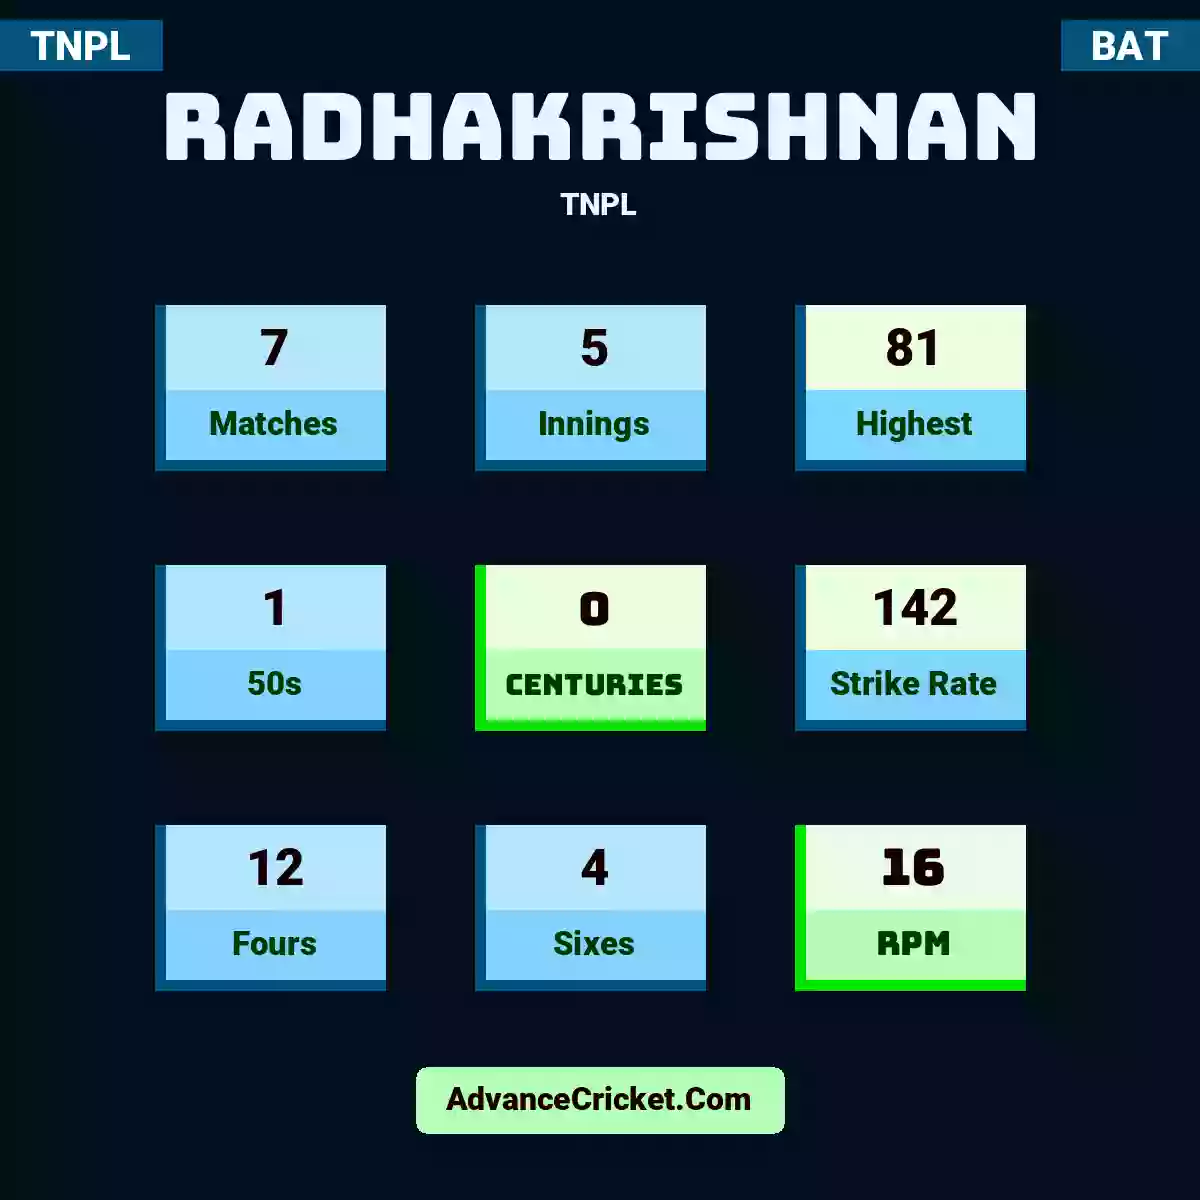 Radhakrishnan TNPL , Radhakrishnan played 7 matches, scored 81 runs as highest, 1 half-centuries, and 0 centuries, with a strike rate of 142. Radhakrishnan hit 12 fours and 4 sixes, with an RPM of 16.